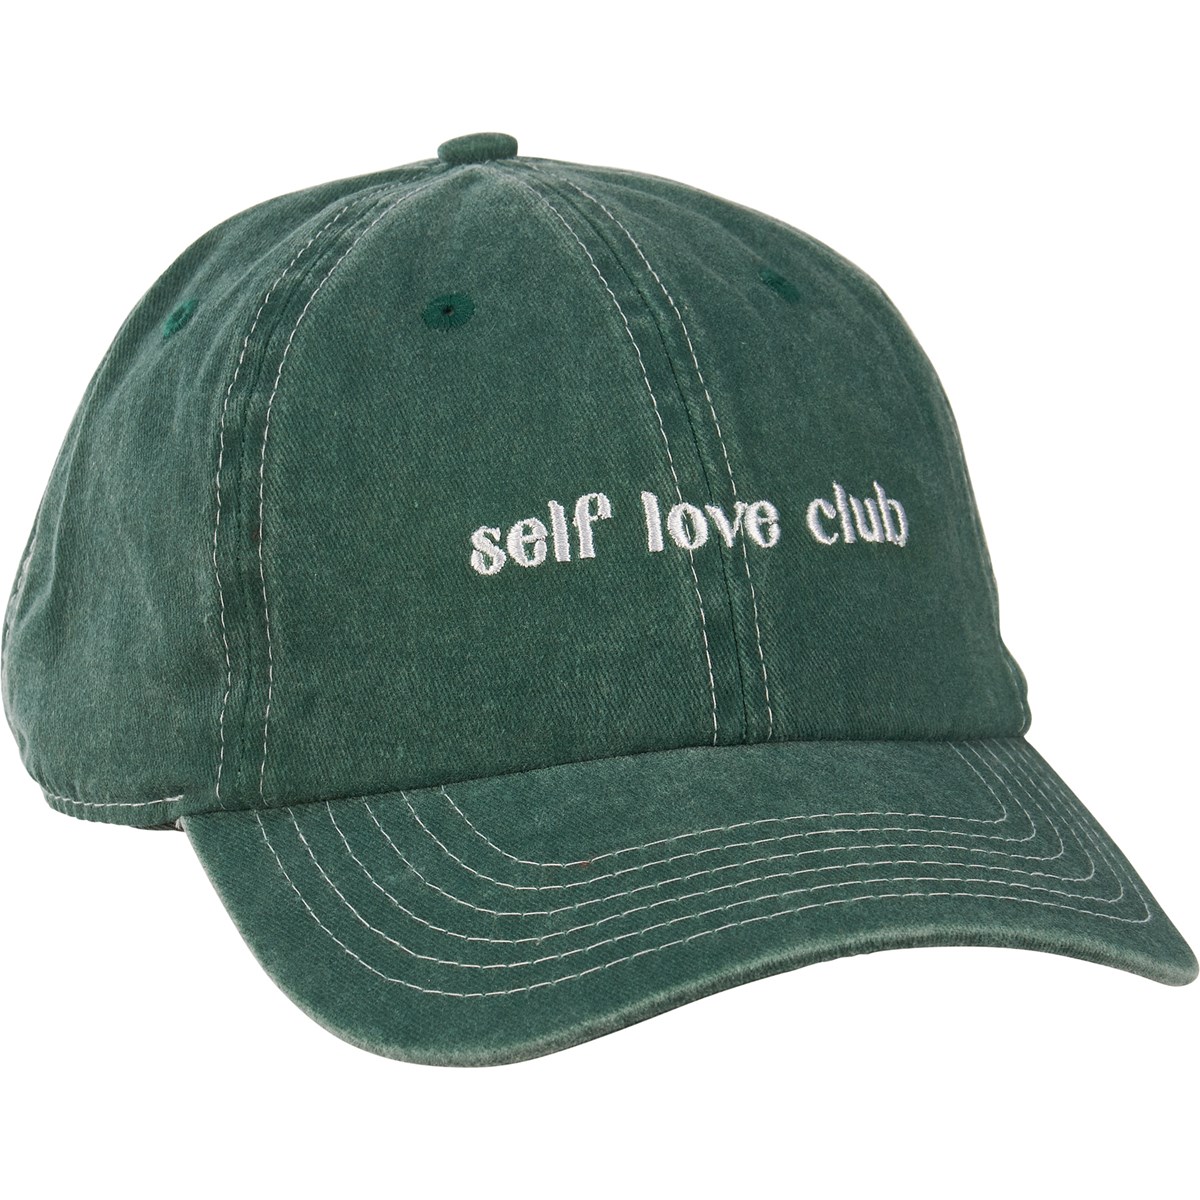 Self Love Club Baseball Cap - Cotton, Metal